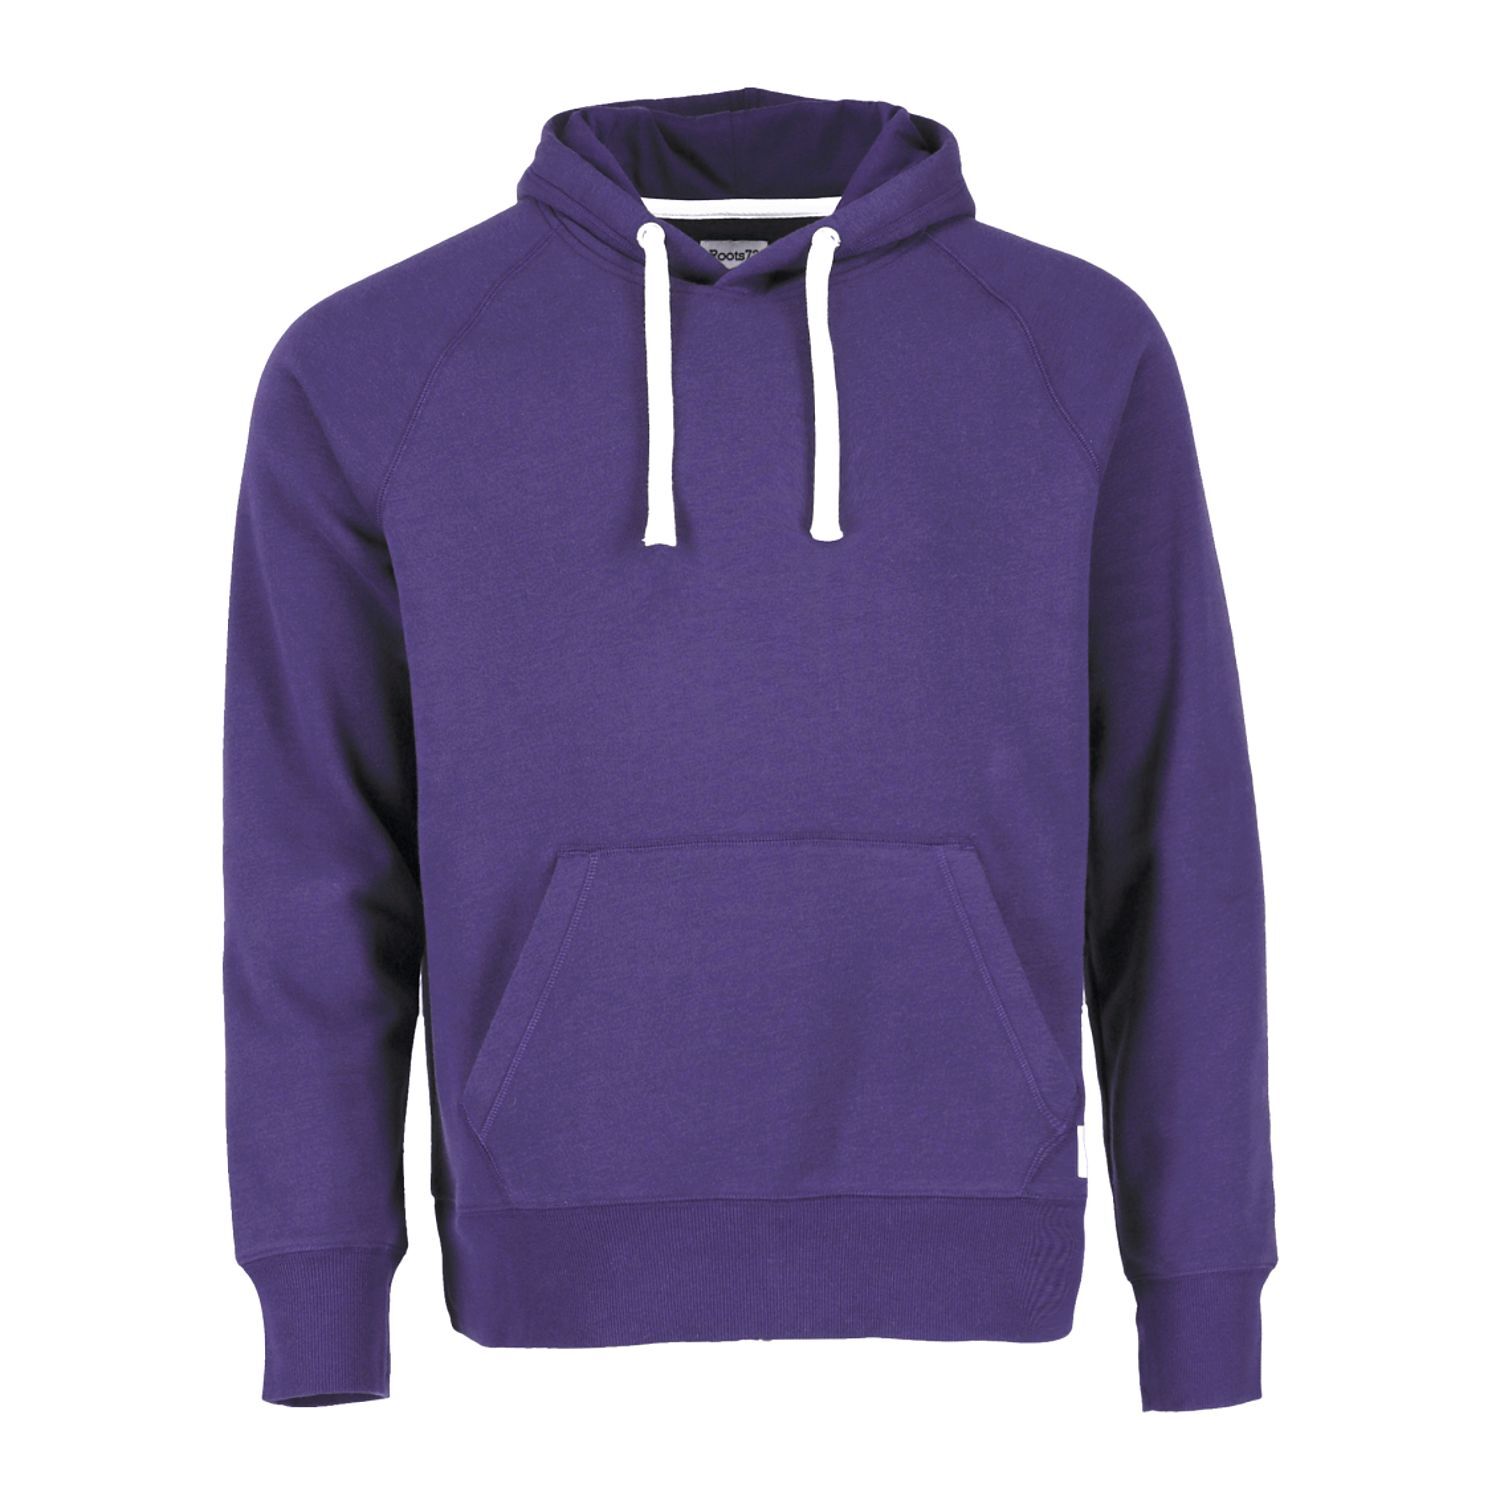 Custom Branded Roots73 Hoodies - Bright Purple